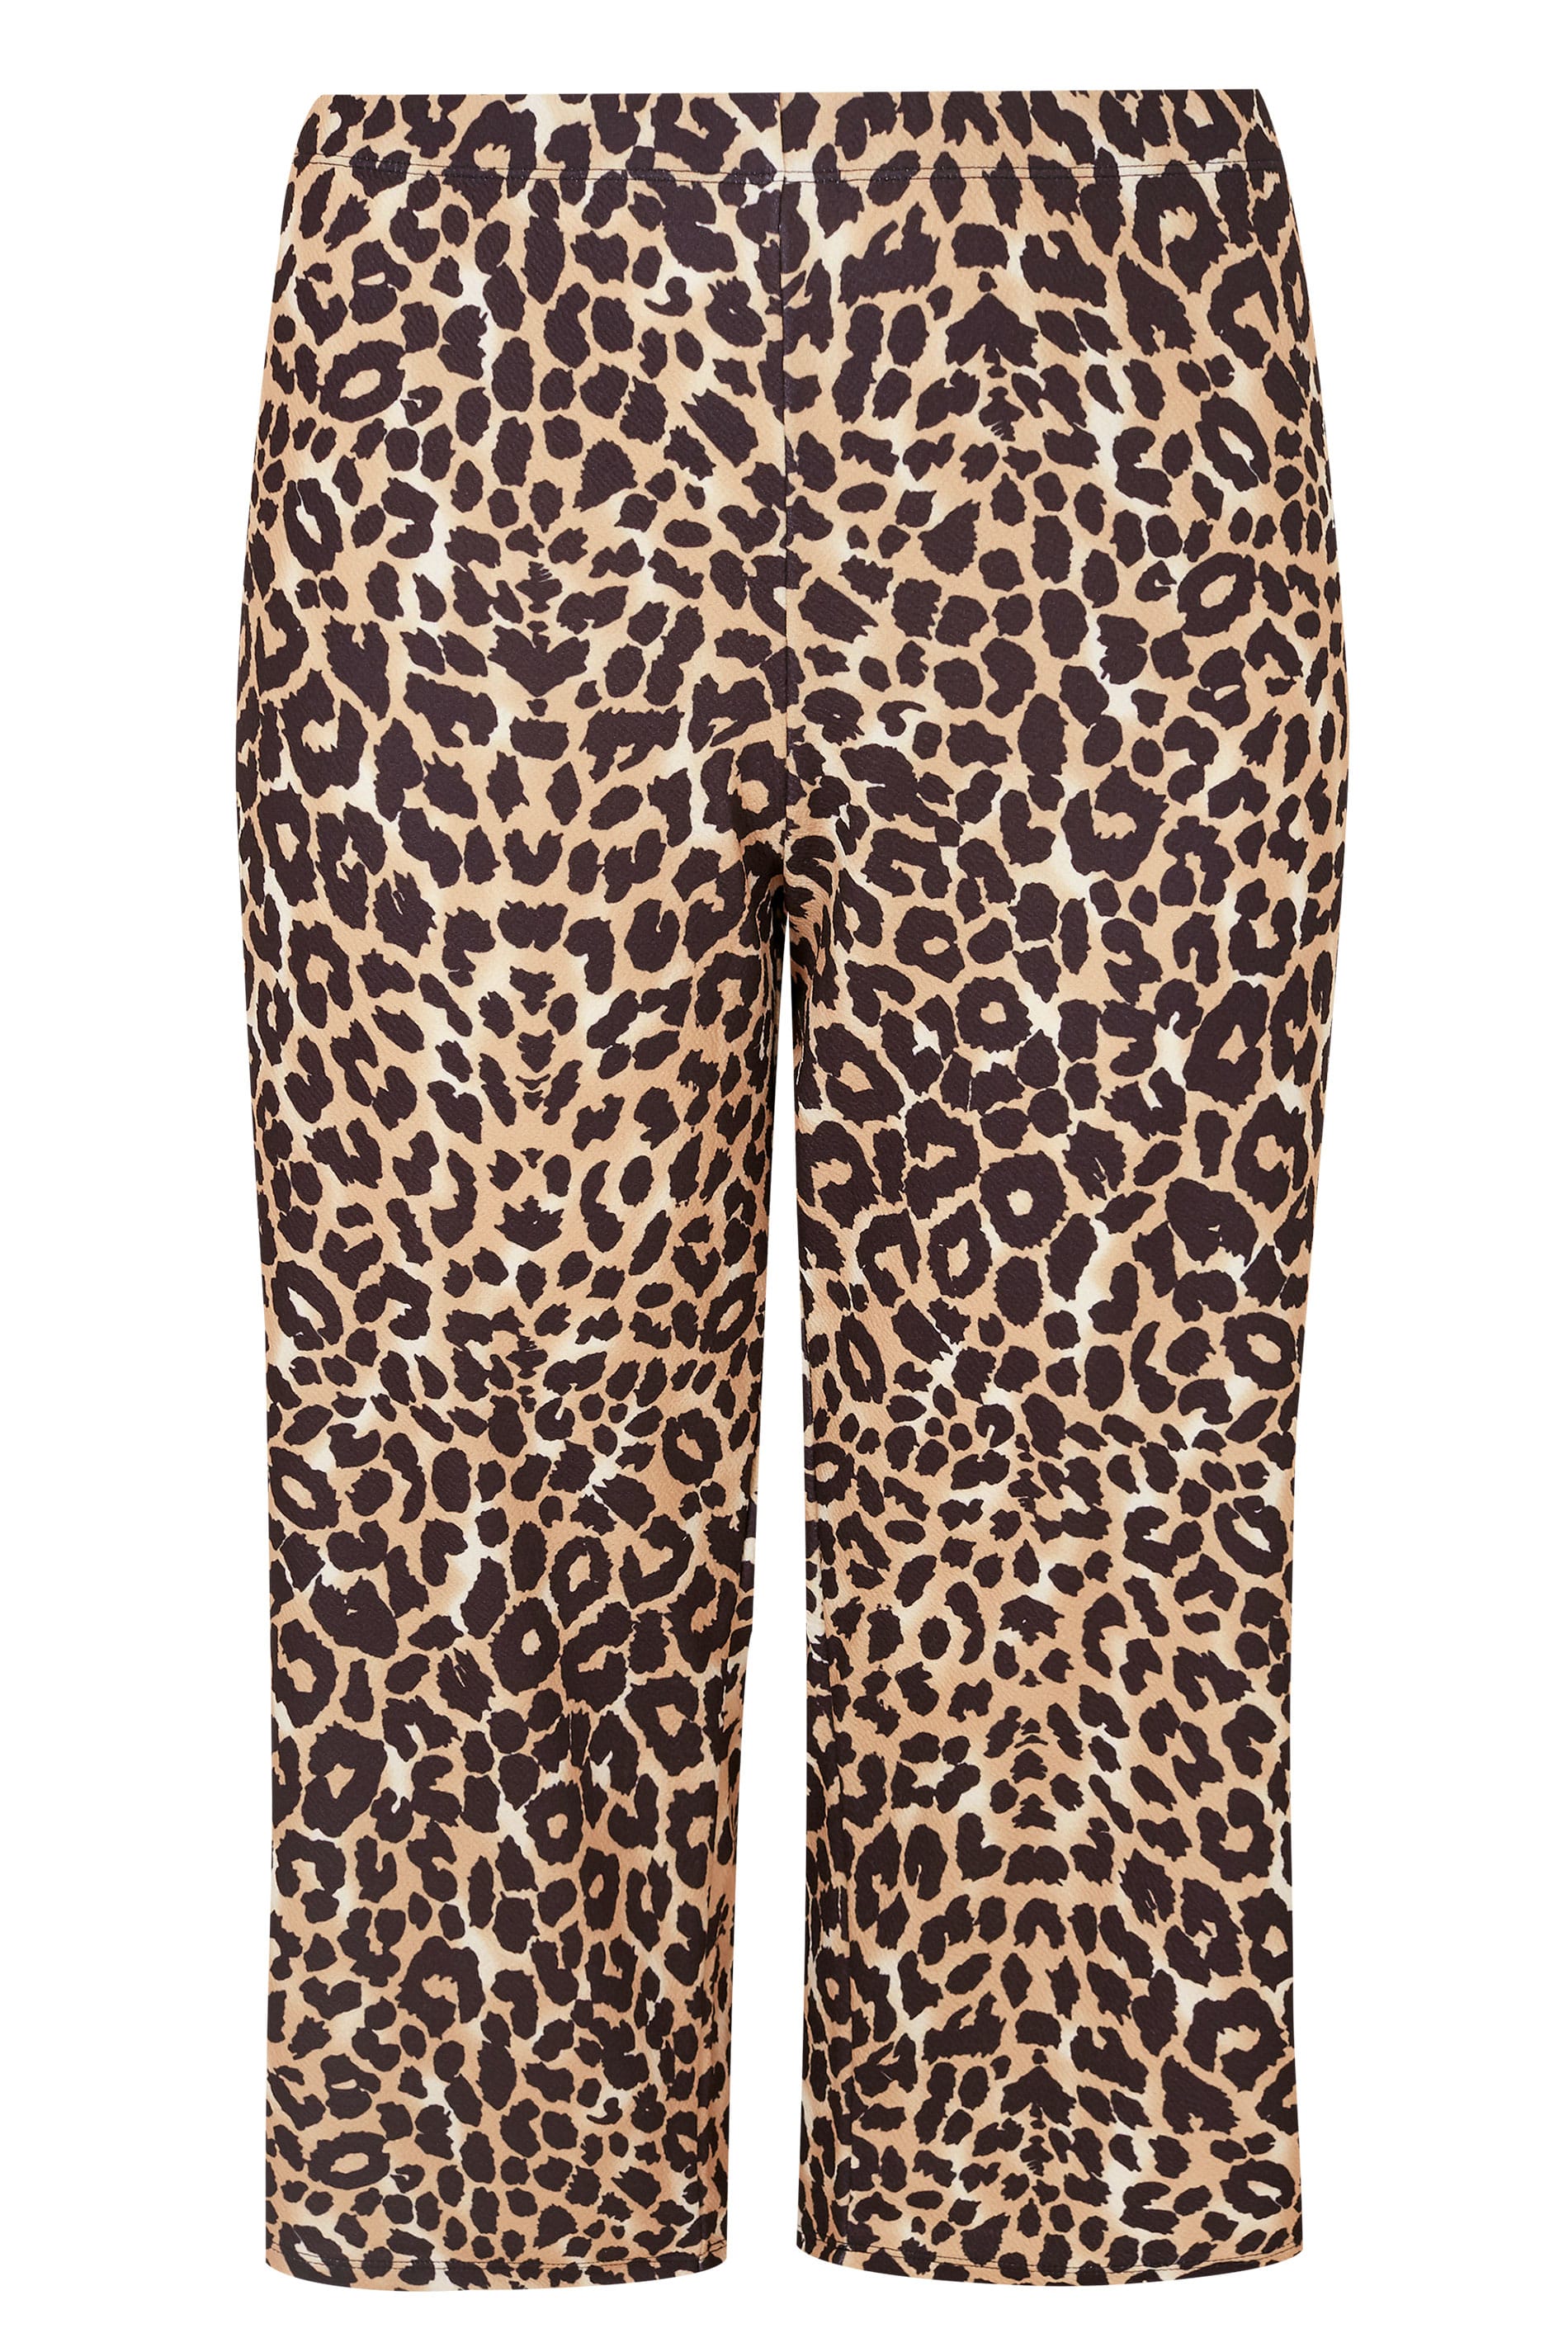 Leopard Print Culottes, Plus size 16 to 36